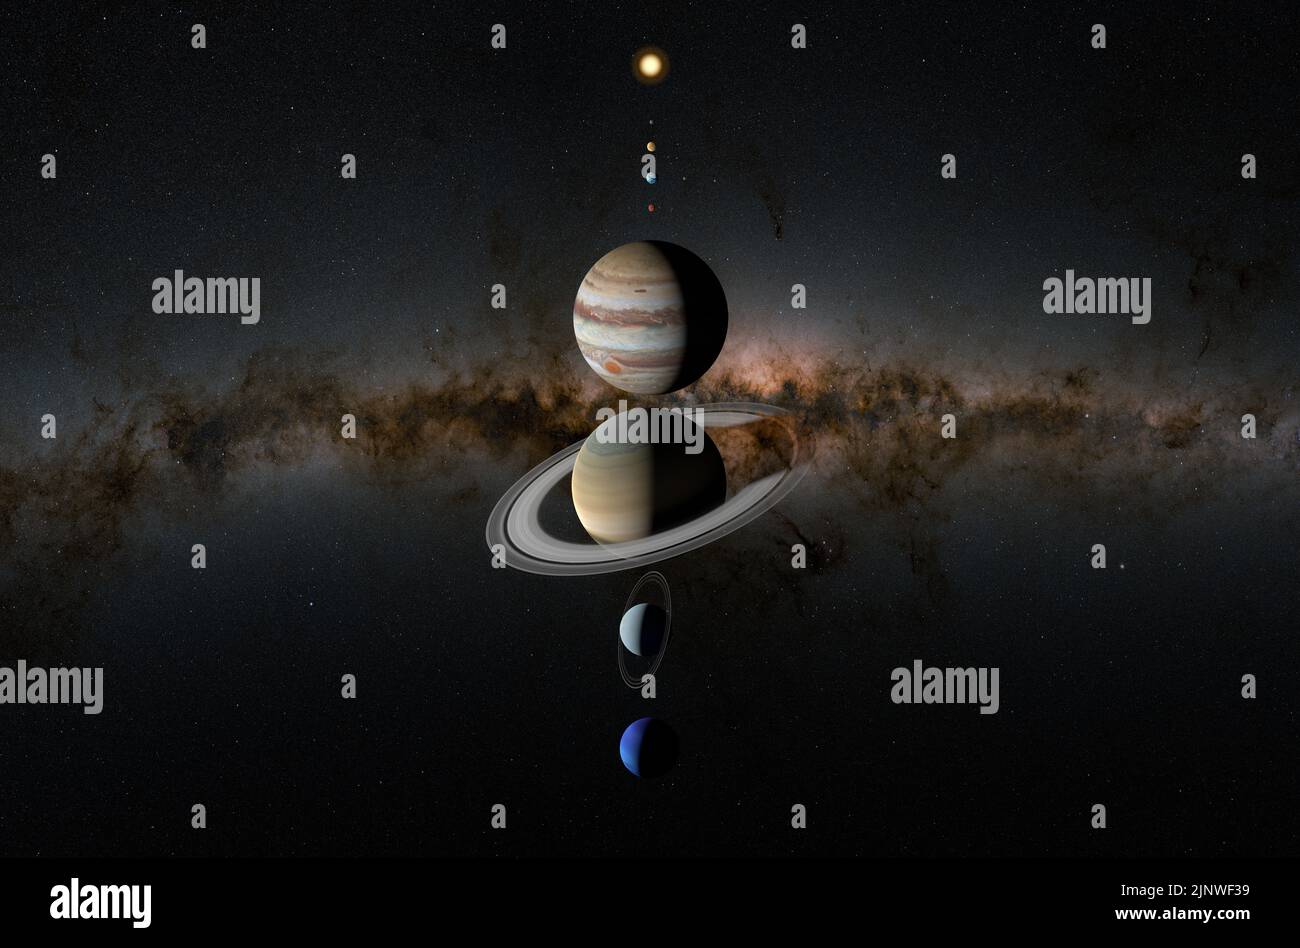 Planets of our solar system - Mercury, Venus, Earth, Mars, Jupiter, Saturn, Uranus, and Neptune - 3d illustration, front view Stock Photo